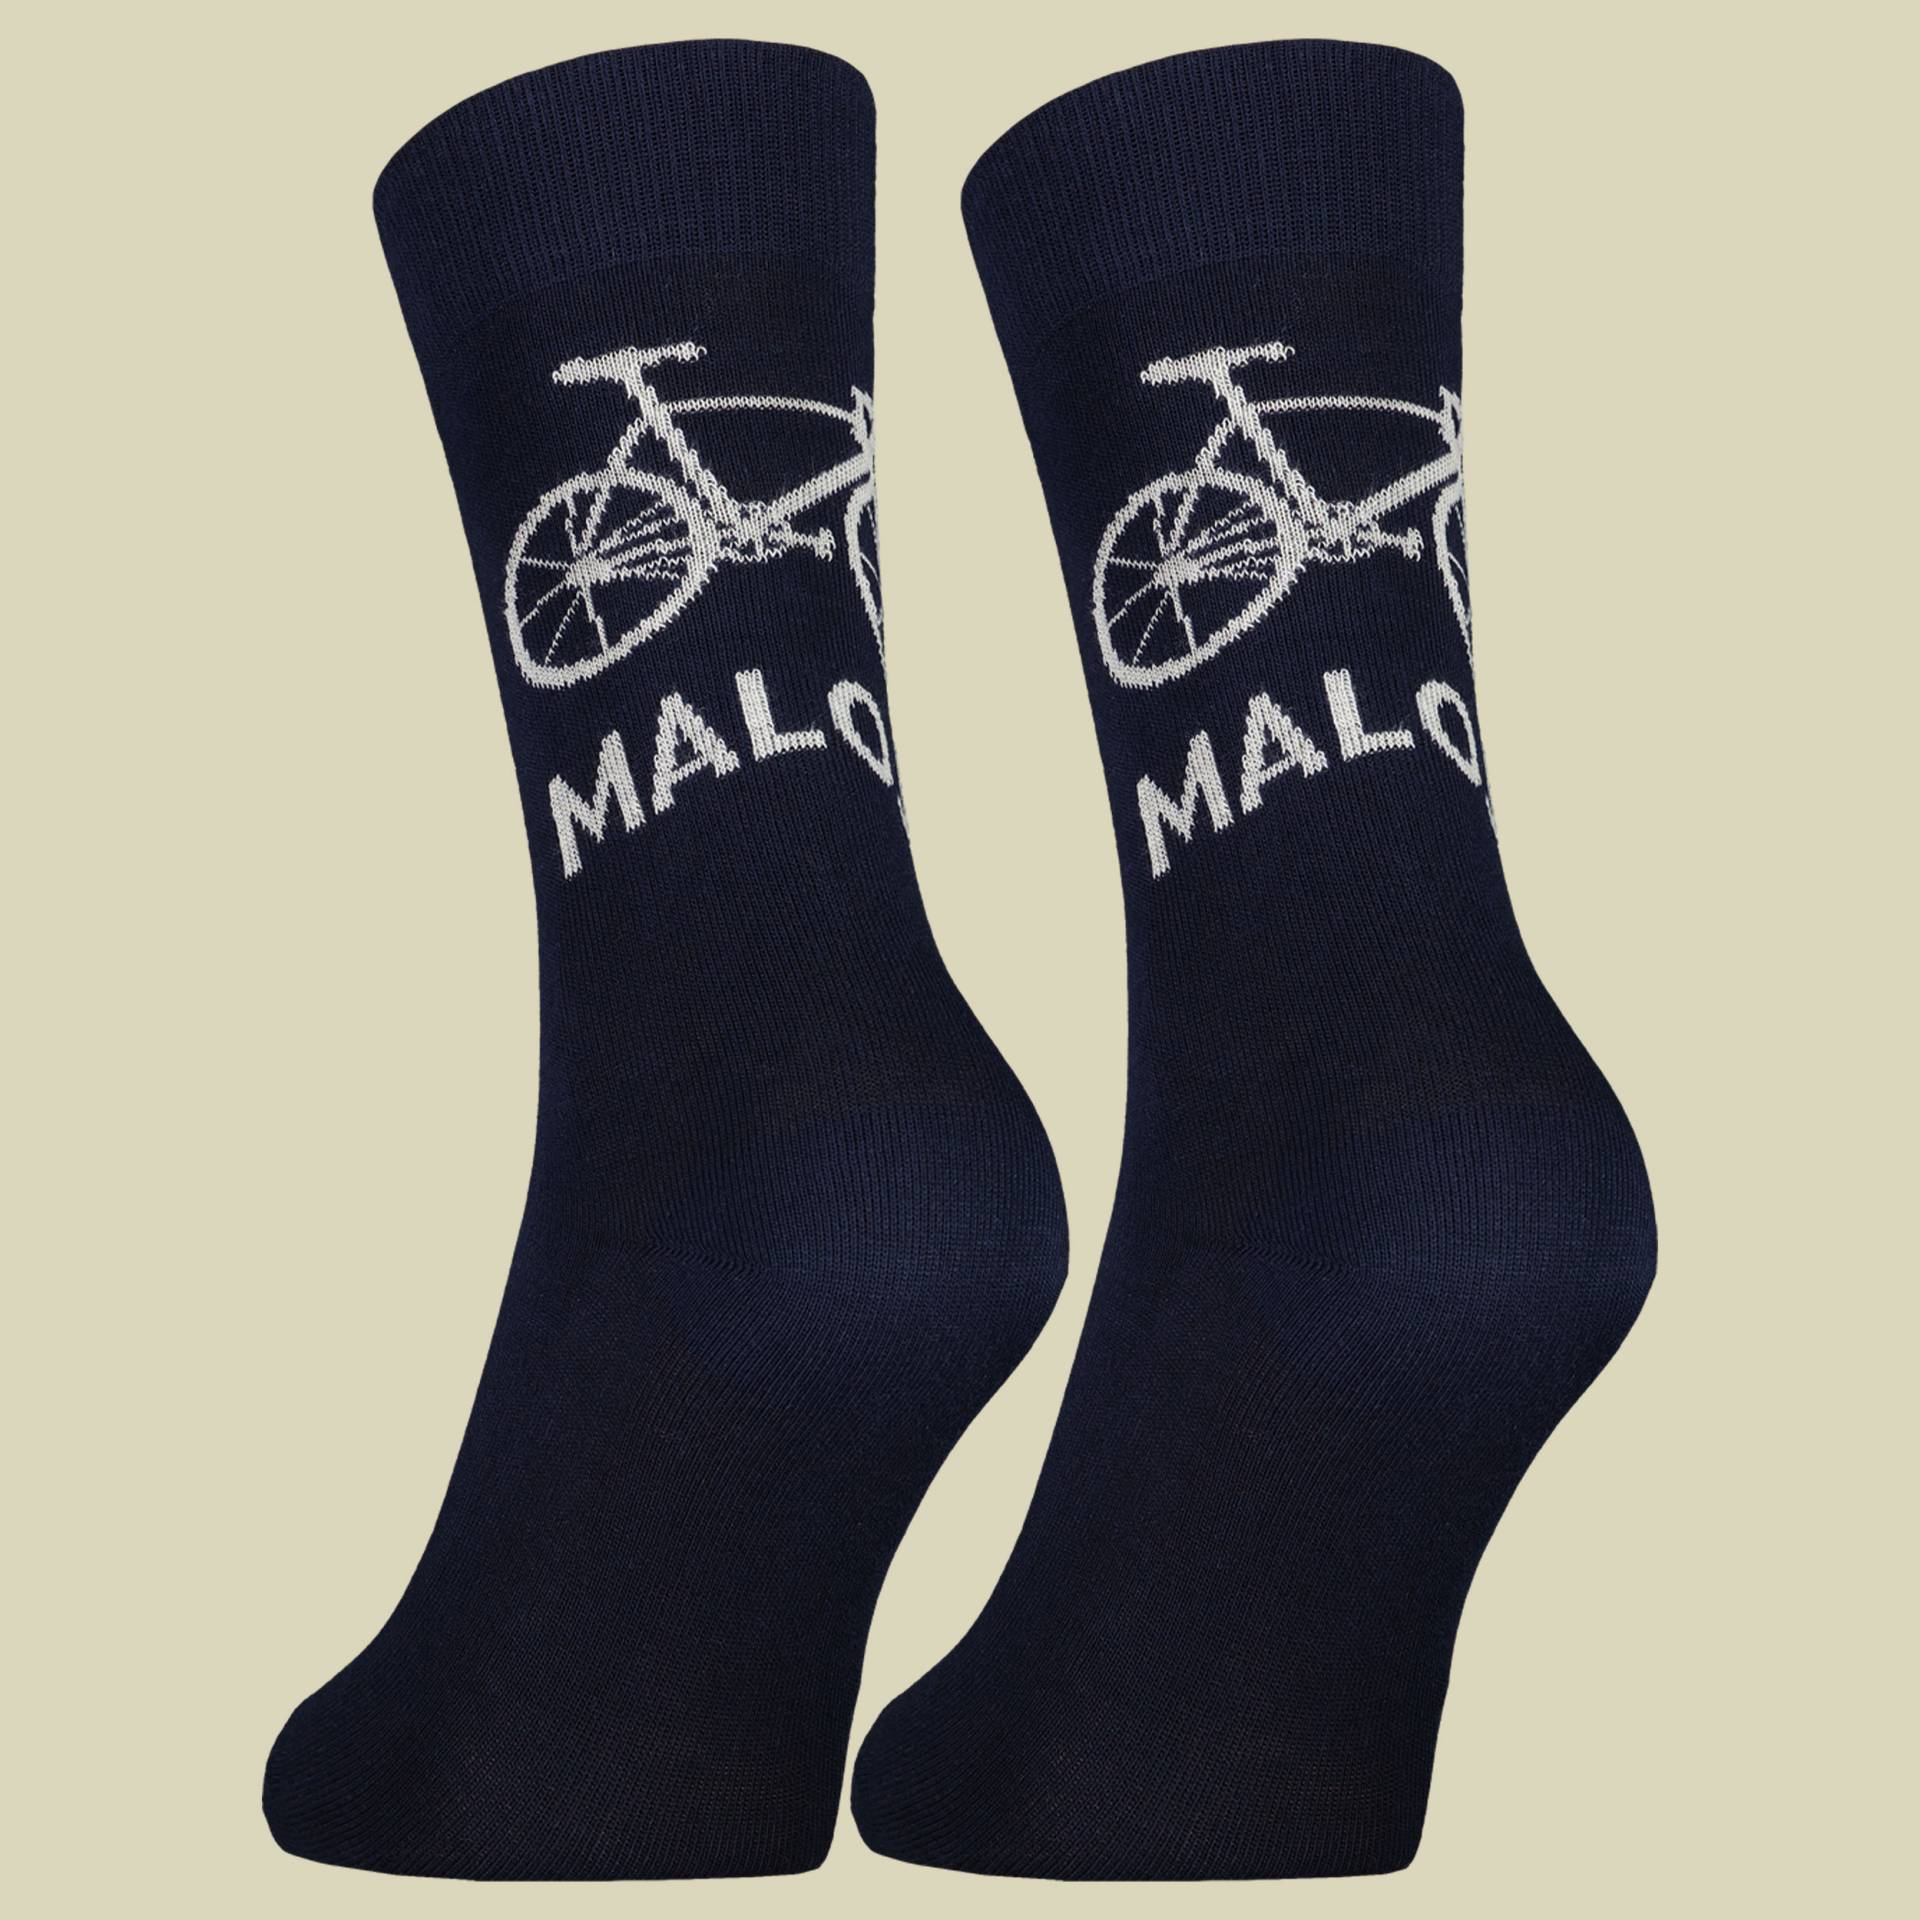 StalkM. Socks Men Größe 39-42 Farbe night sky von Maloja